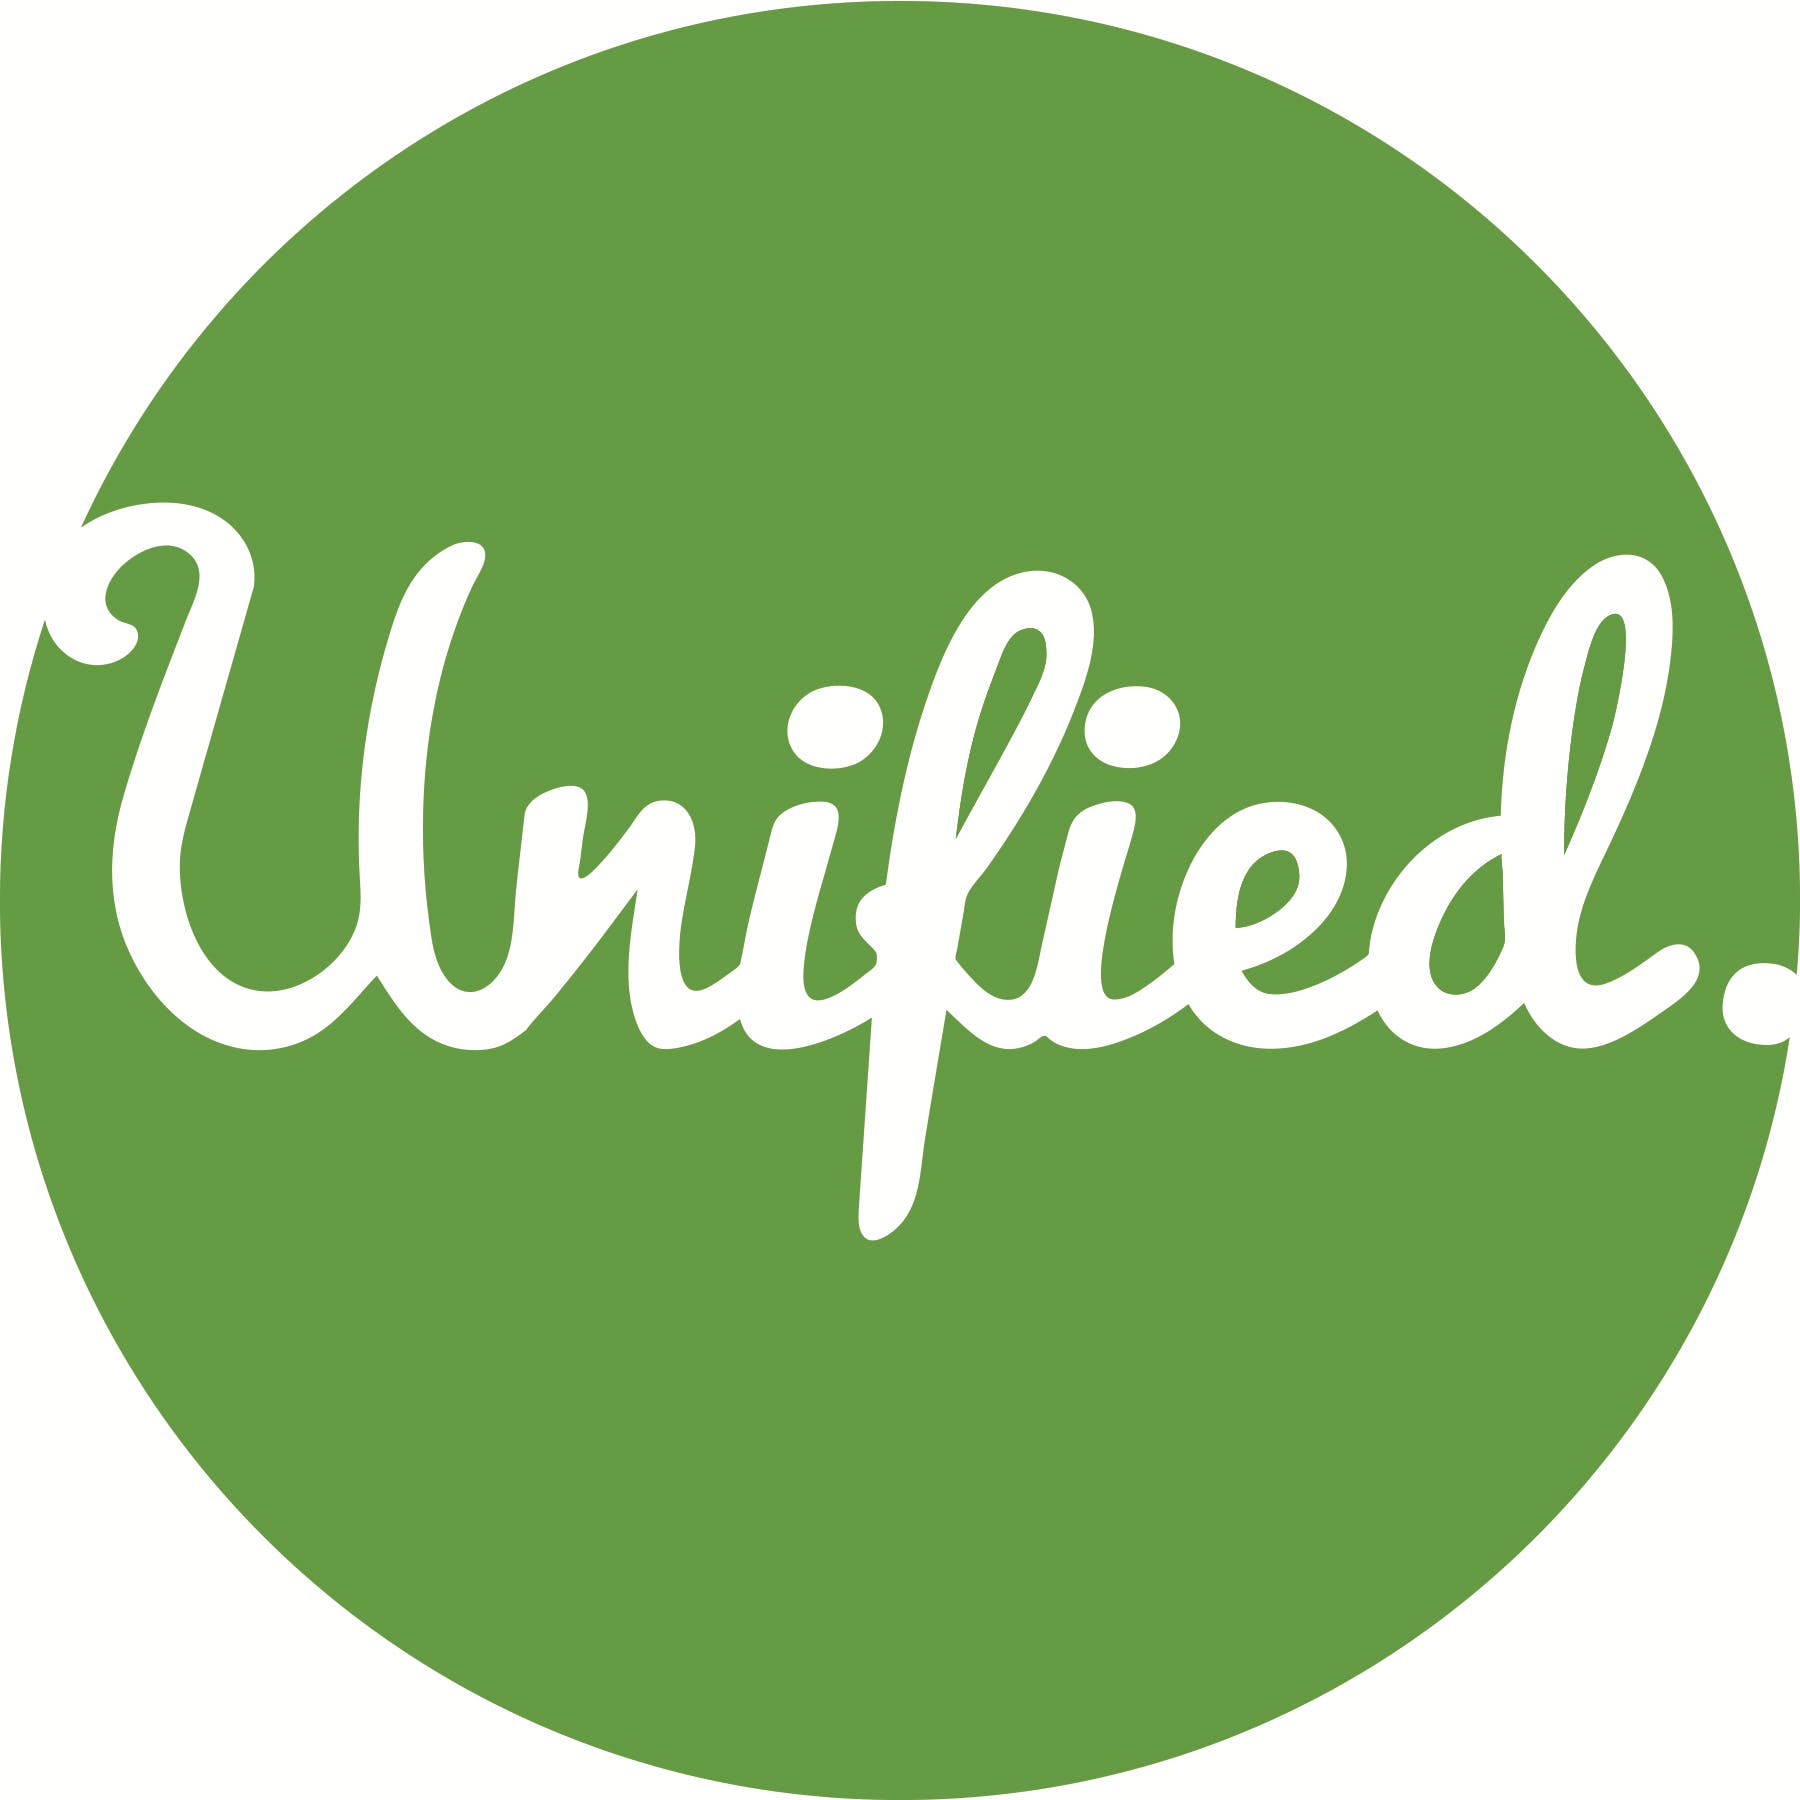 Unified Patient Alliance - Medical Marijuana Doctors - Cannabizme.com